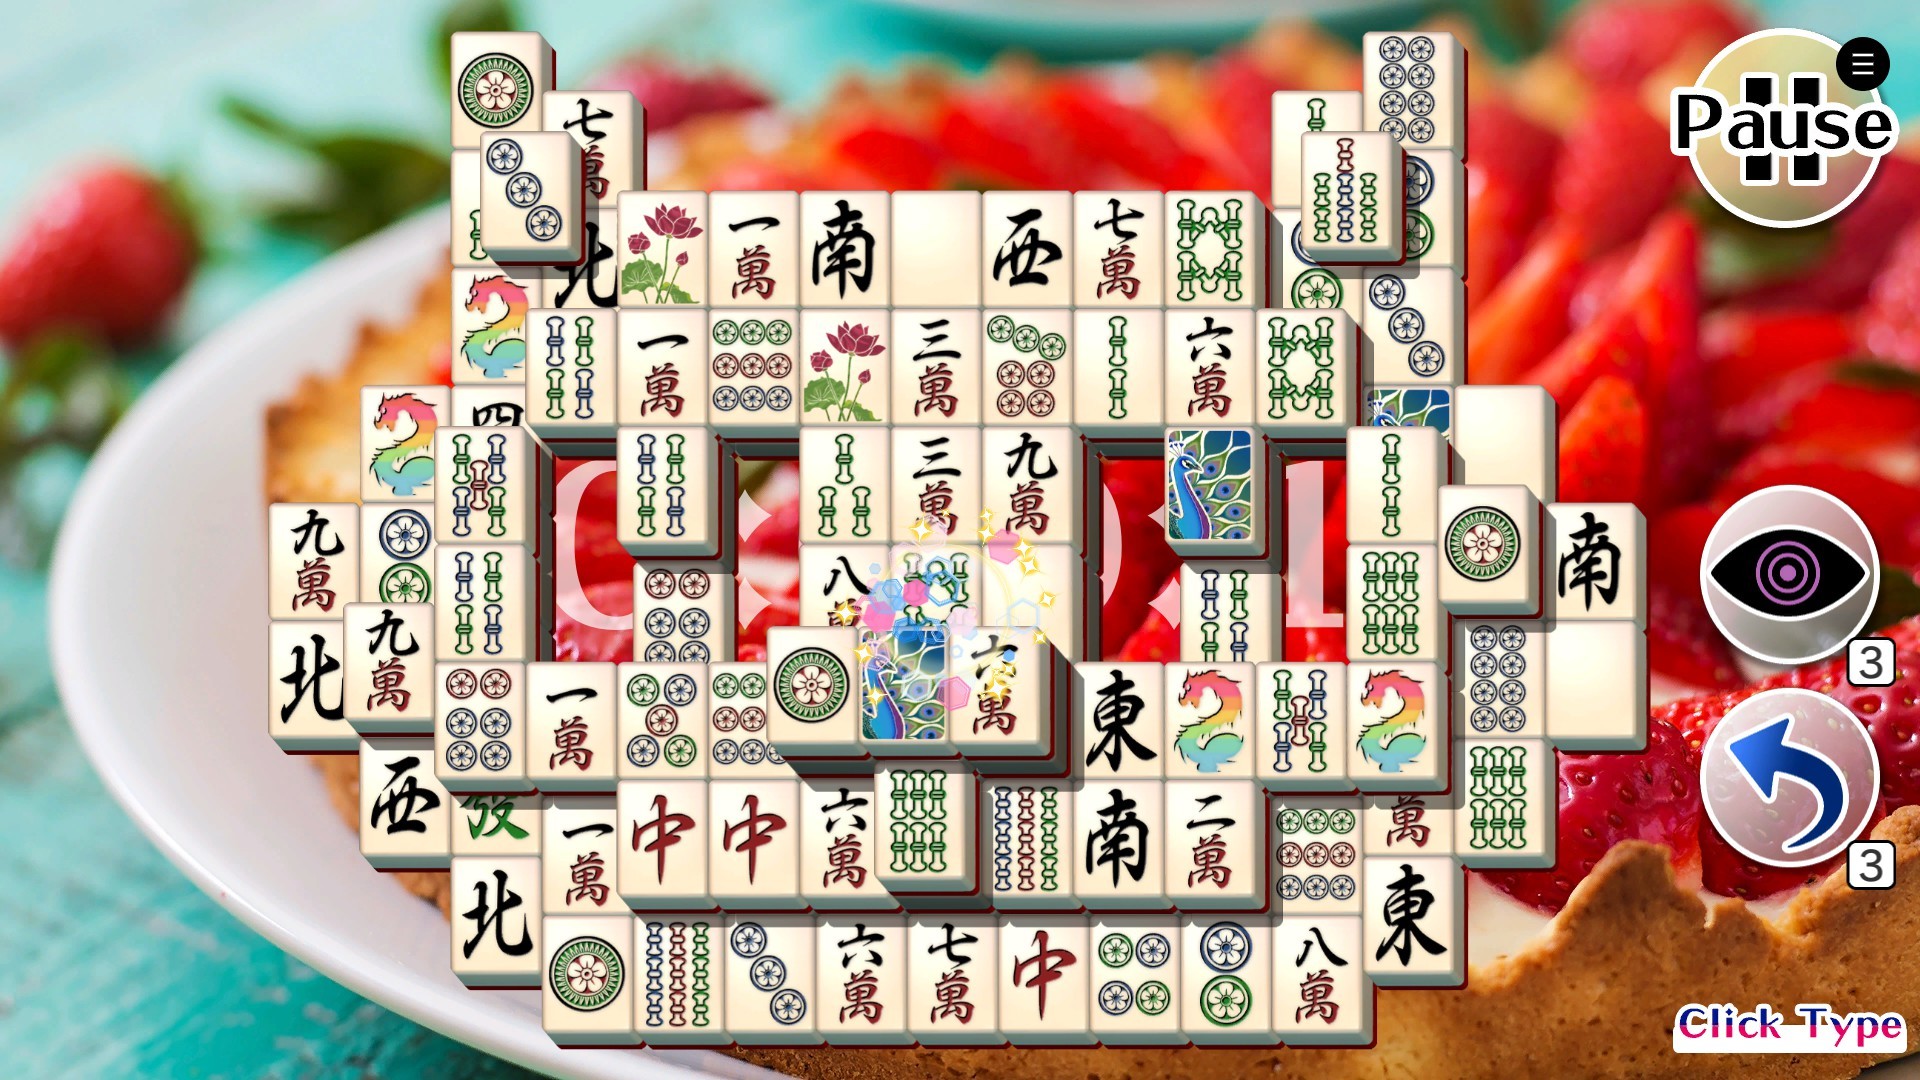 Mahjong on Steam